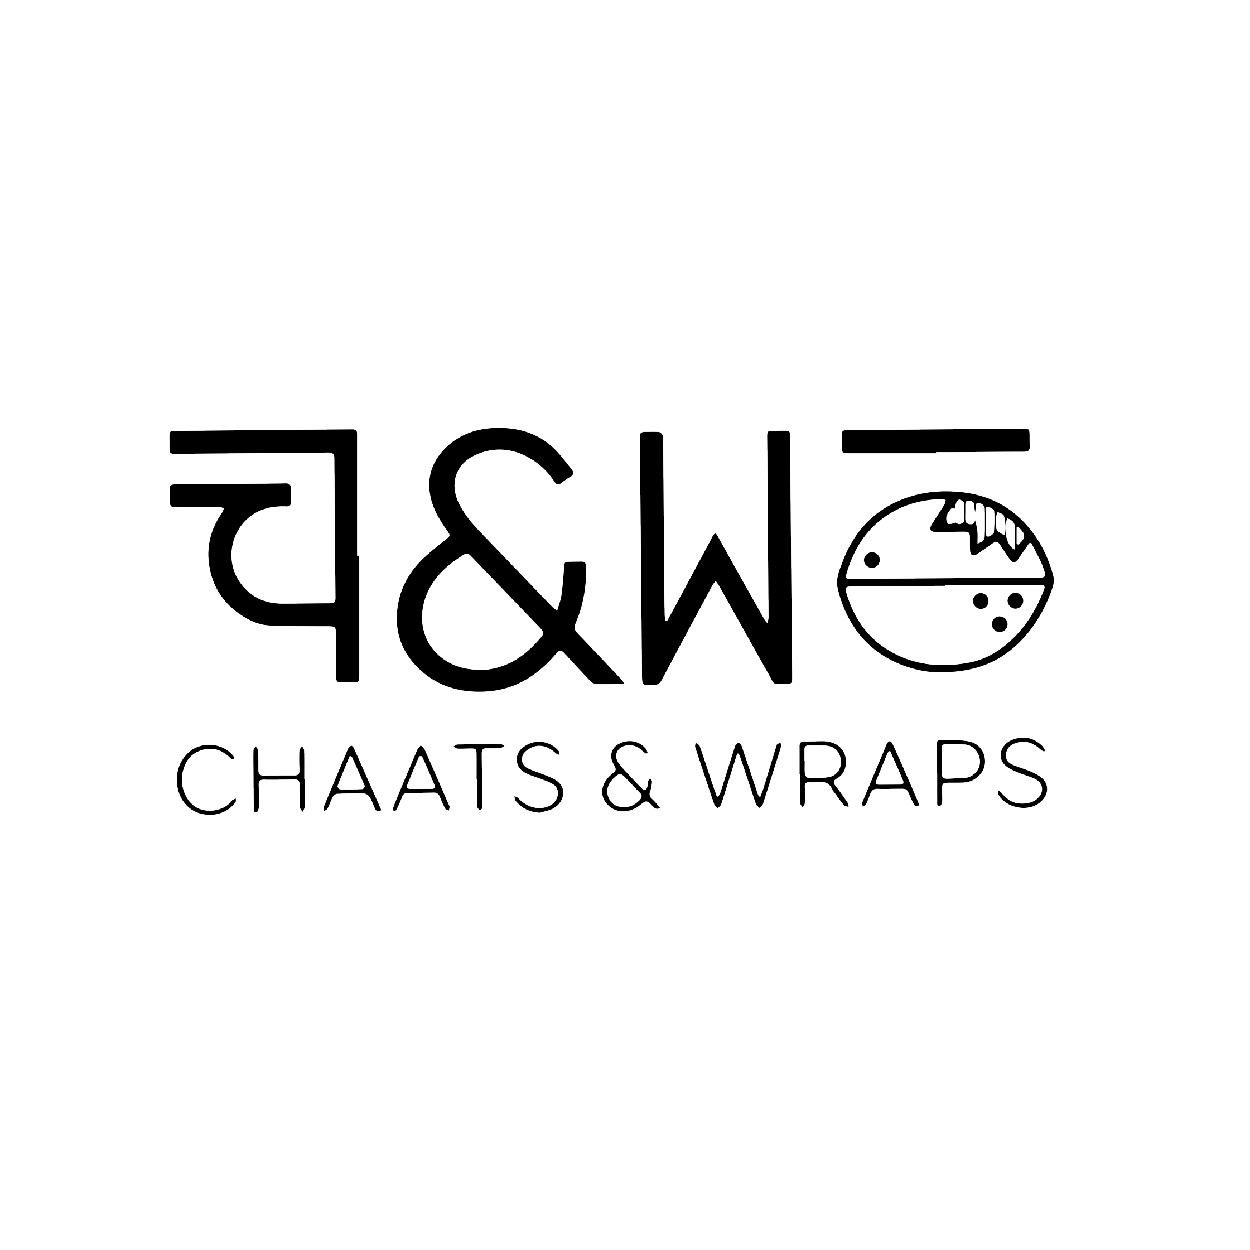 Chaats & Wraps